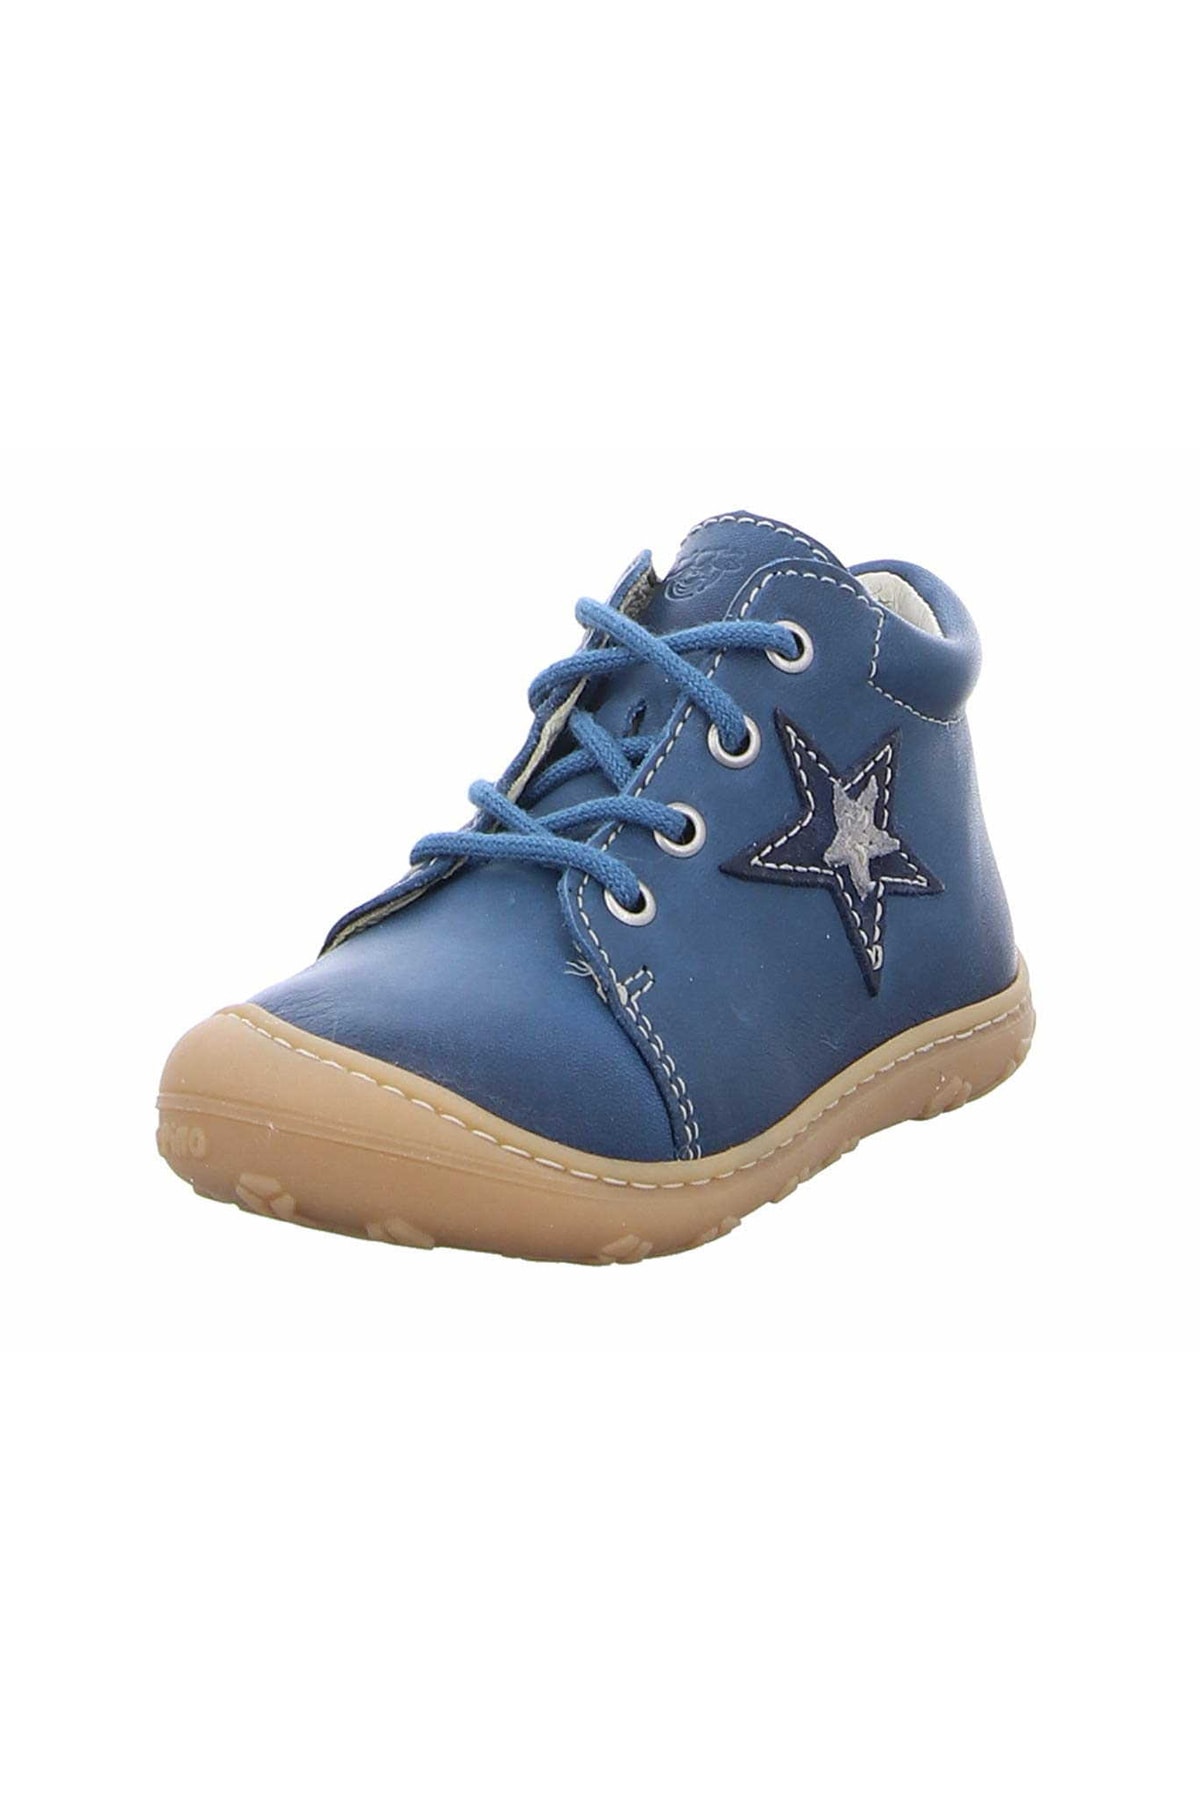 Ricosta Outdoor-Schuhe Blau Flacher Absatz Fast ausverkauft